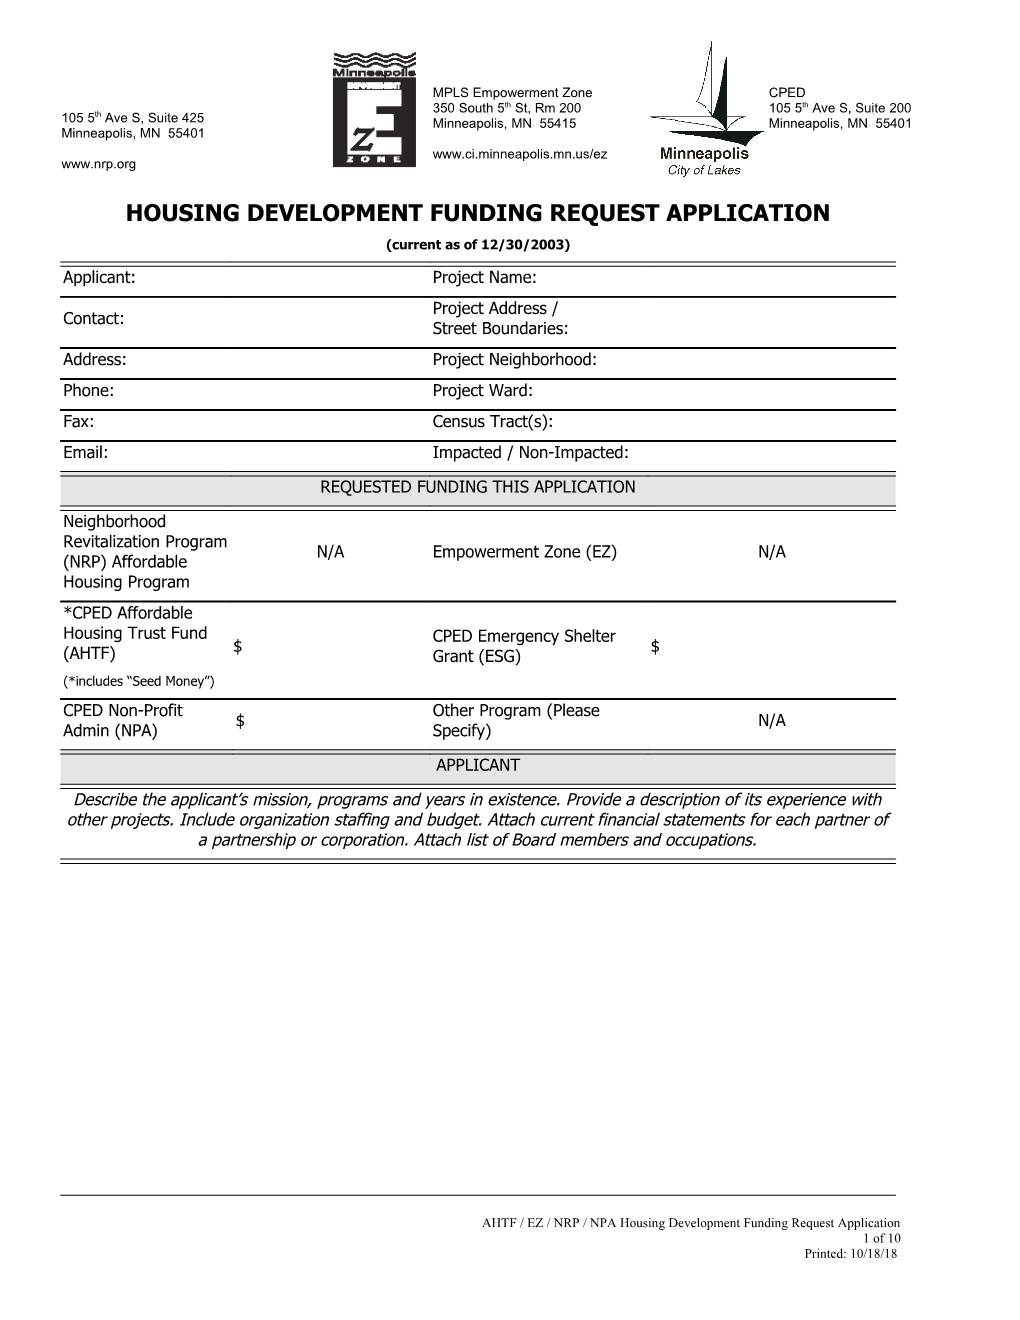 2003 Multifamily Rental and Cooperative Housing Program